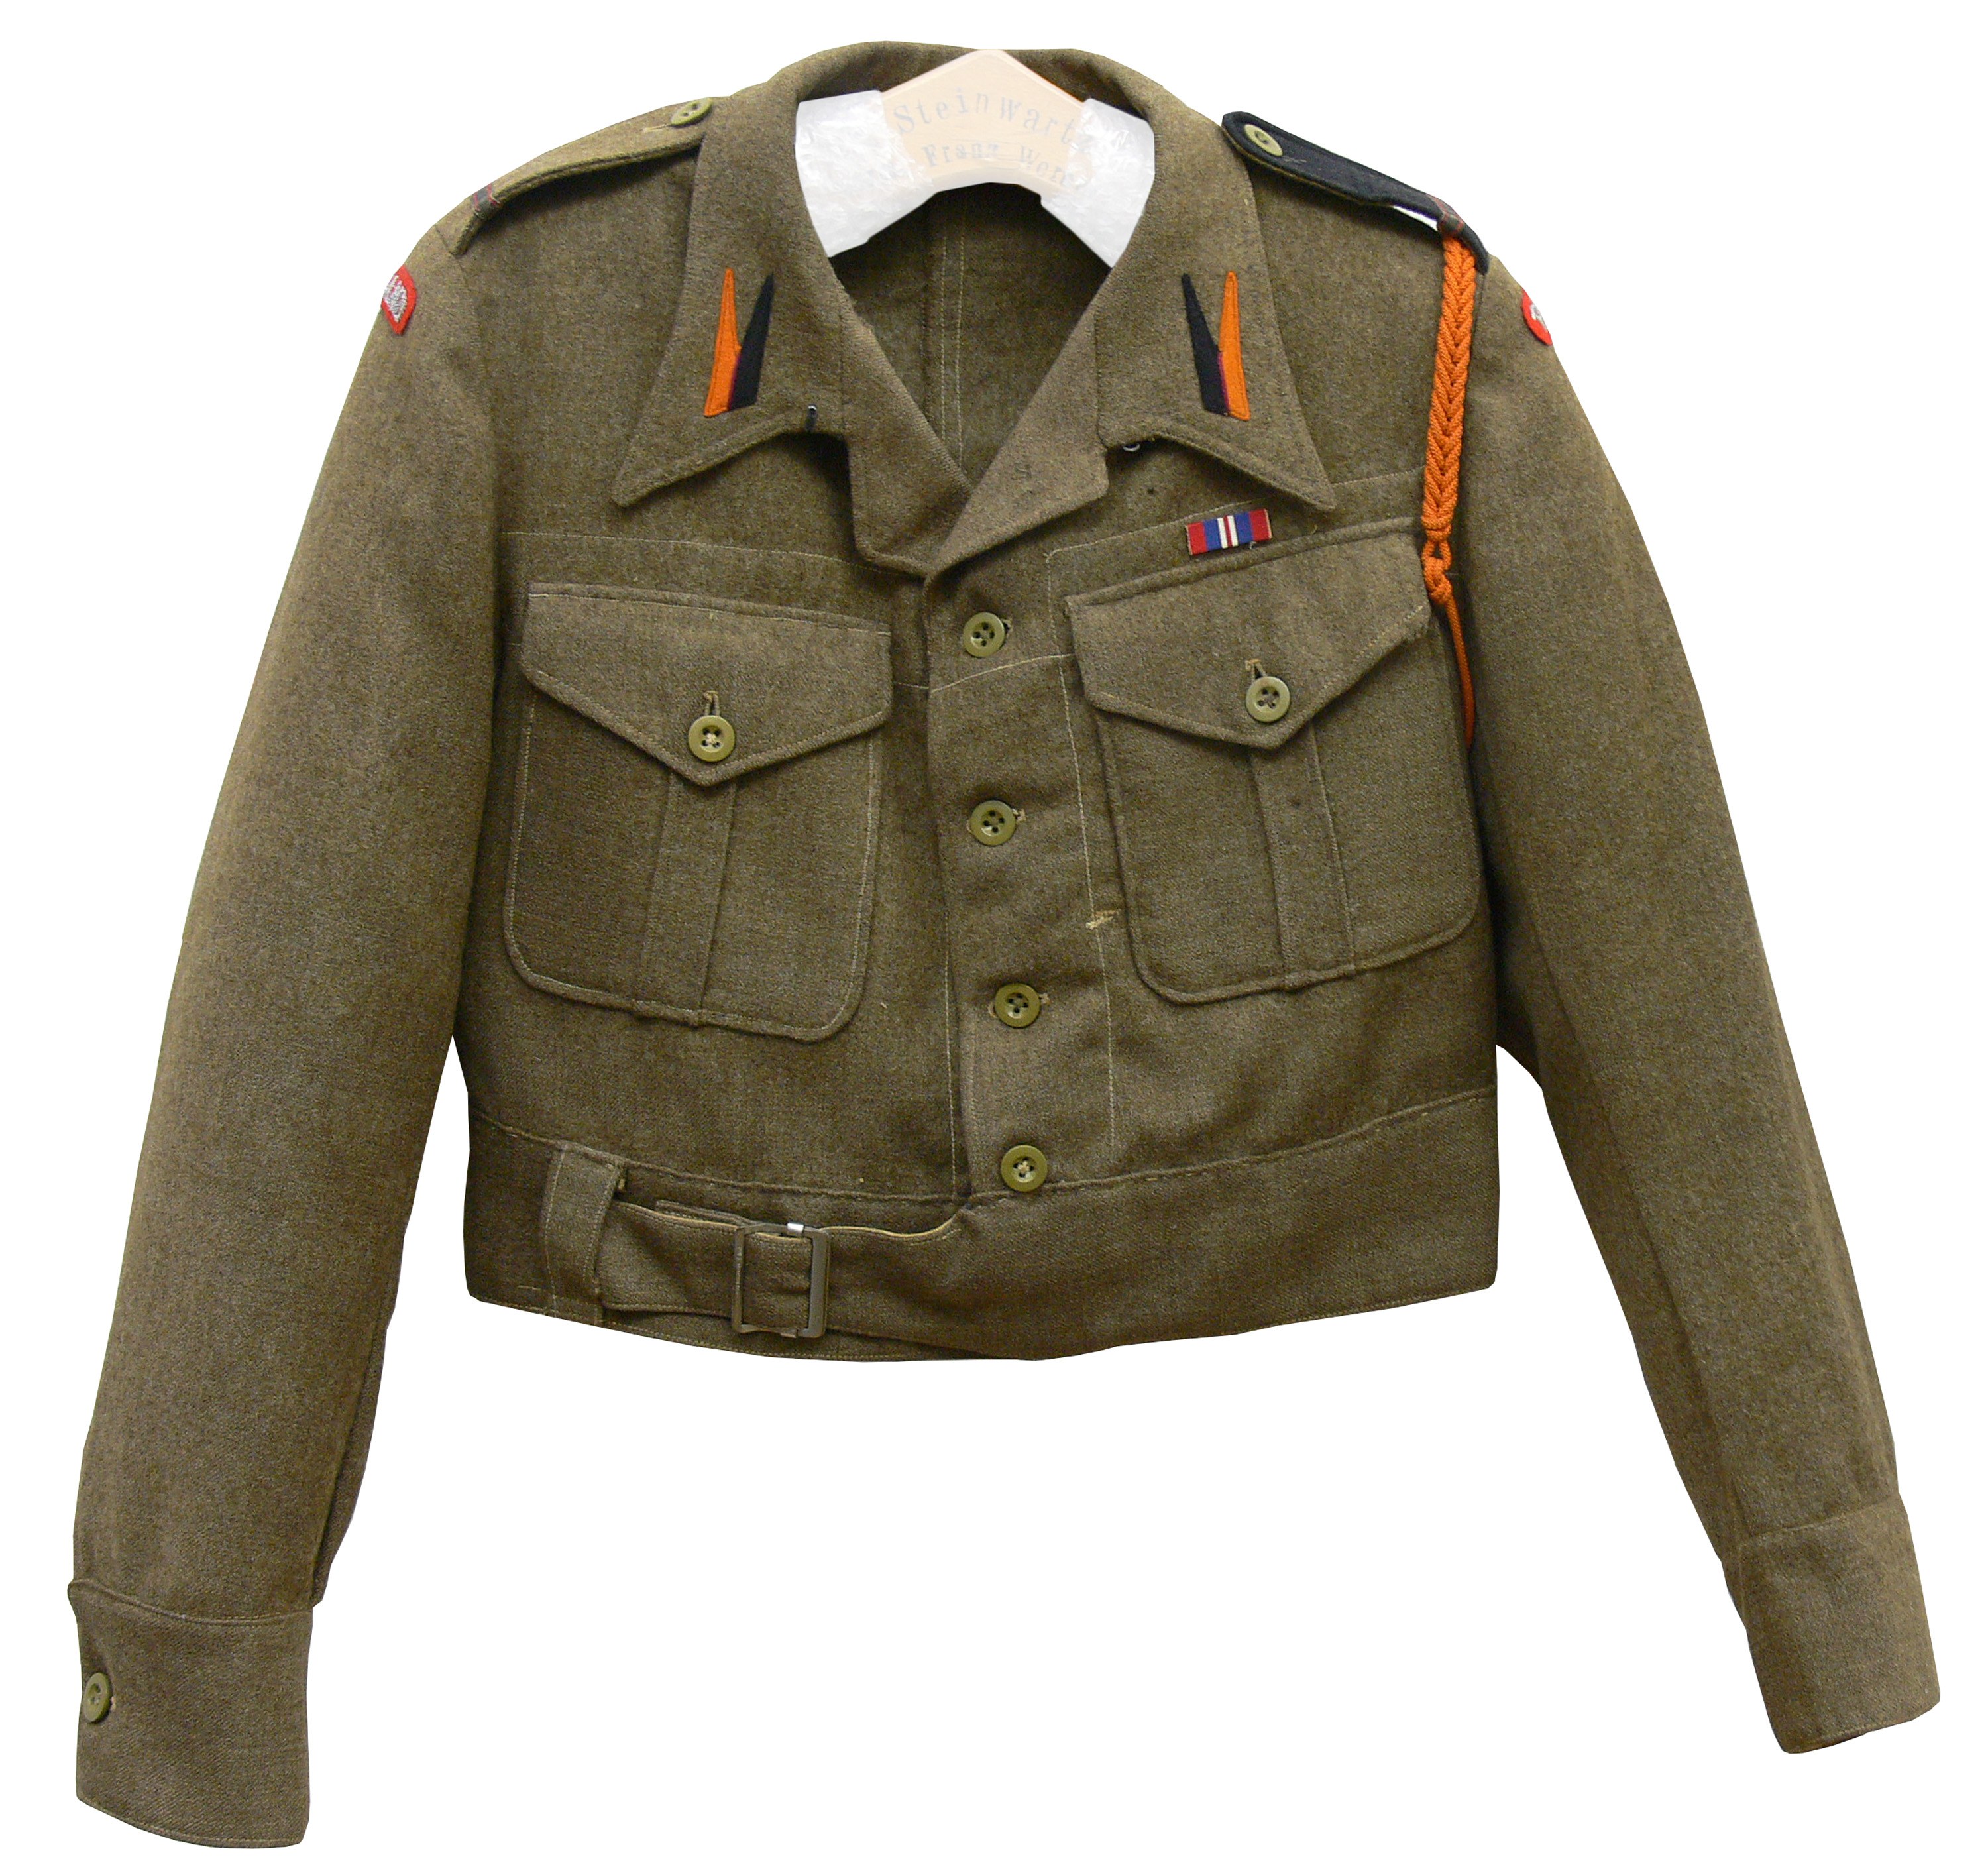 Rare Original 1945 Dated ATS Hospital Blue Battledress Jacket - Size 7 in  WW2 jackets & coats